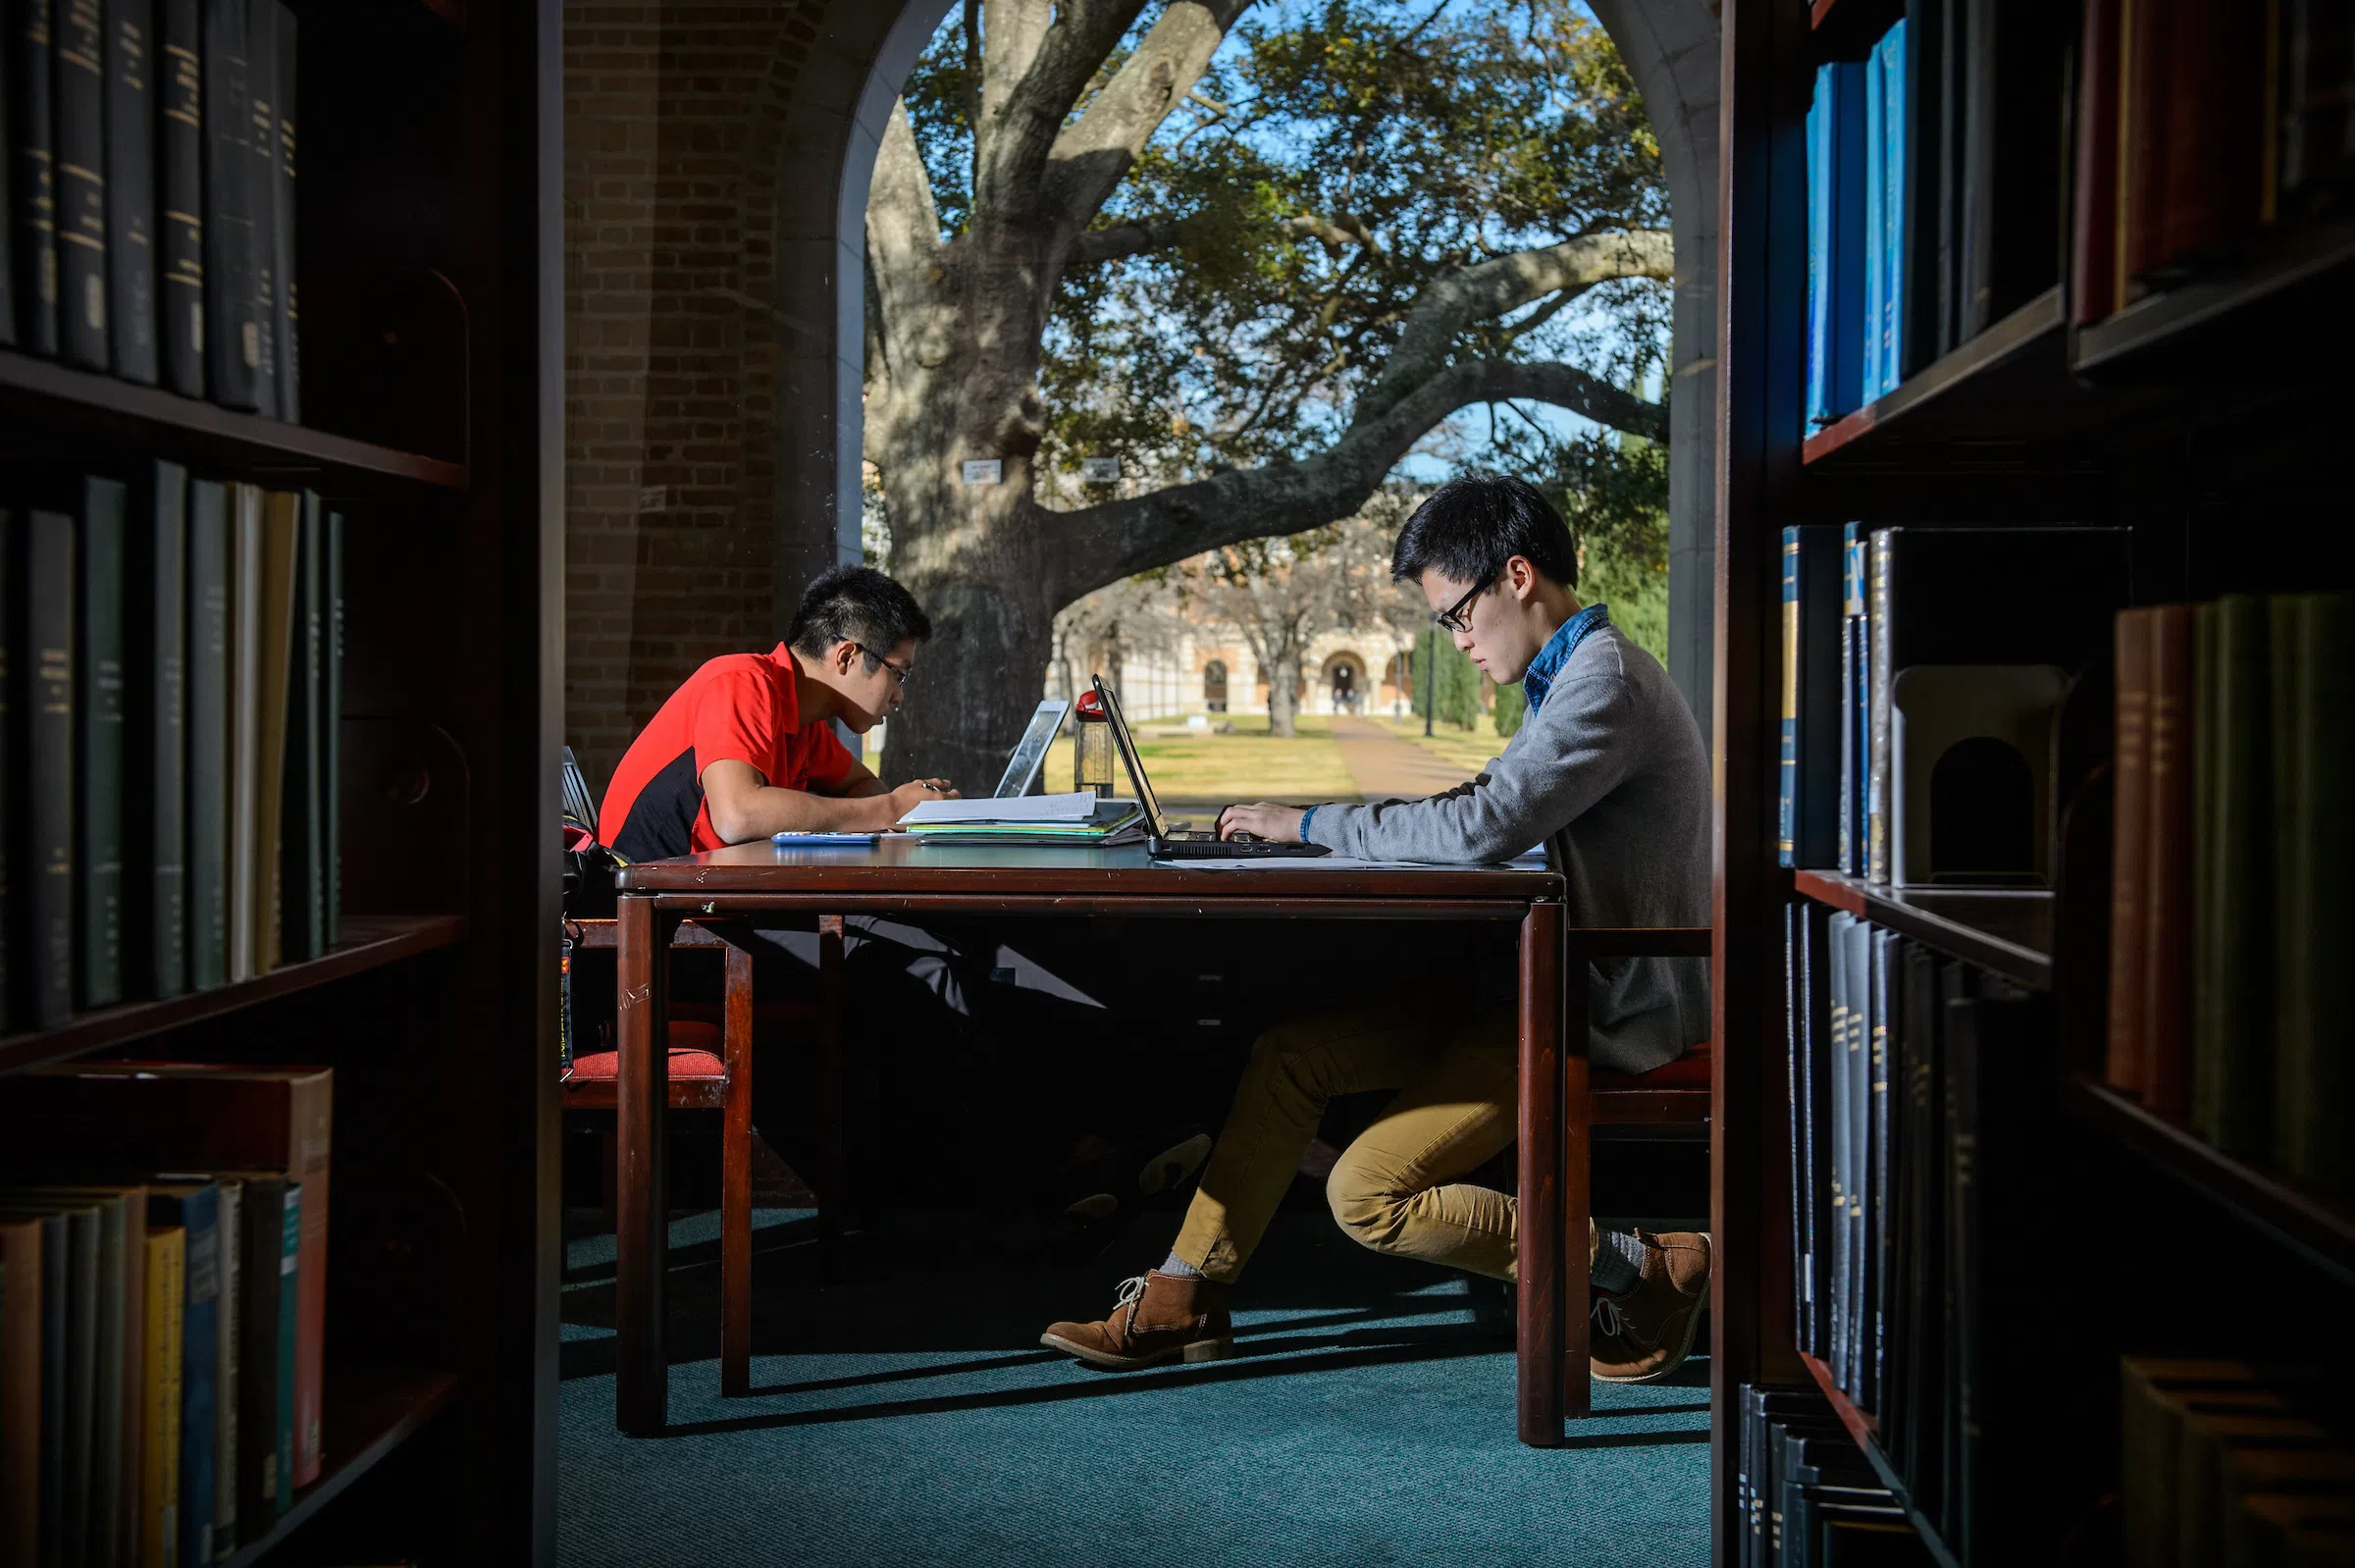 Students studying at Rice University's Fondren Library